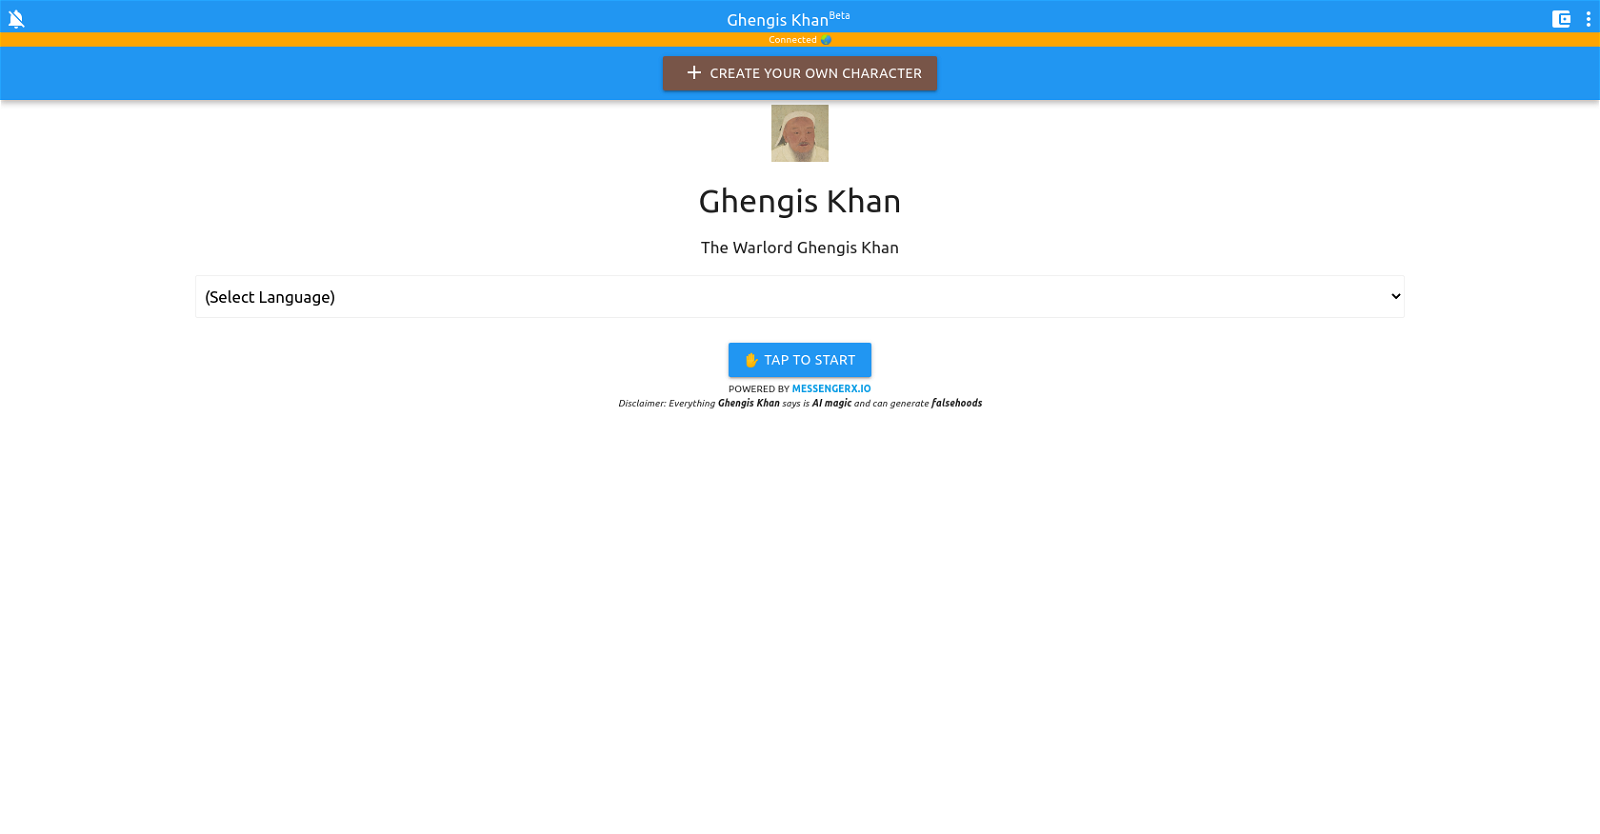 Ghengis Khan chatbot